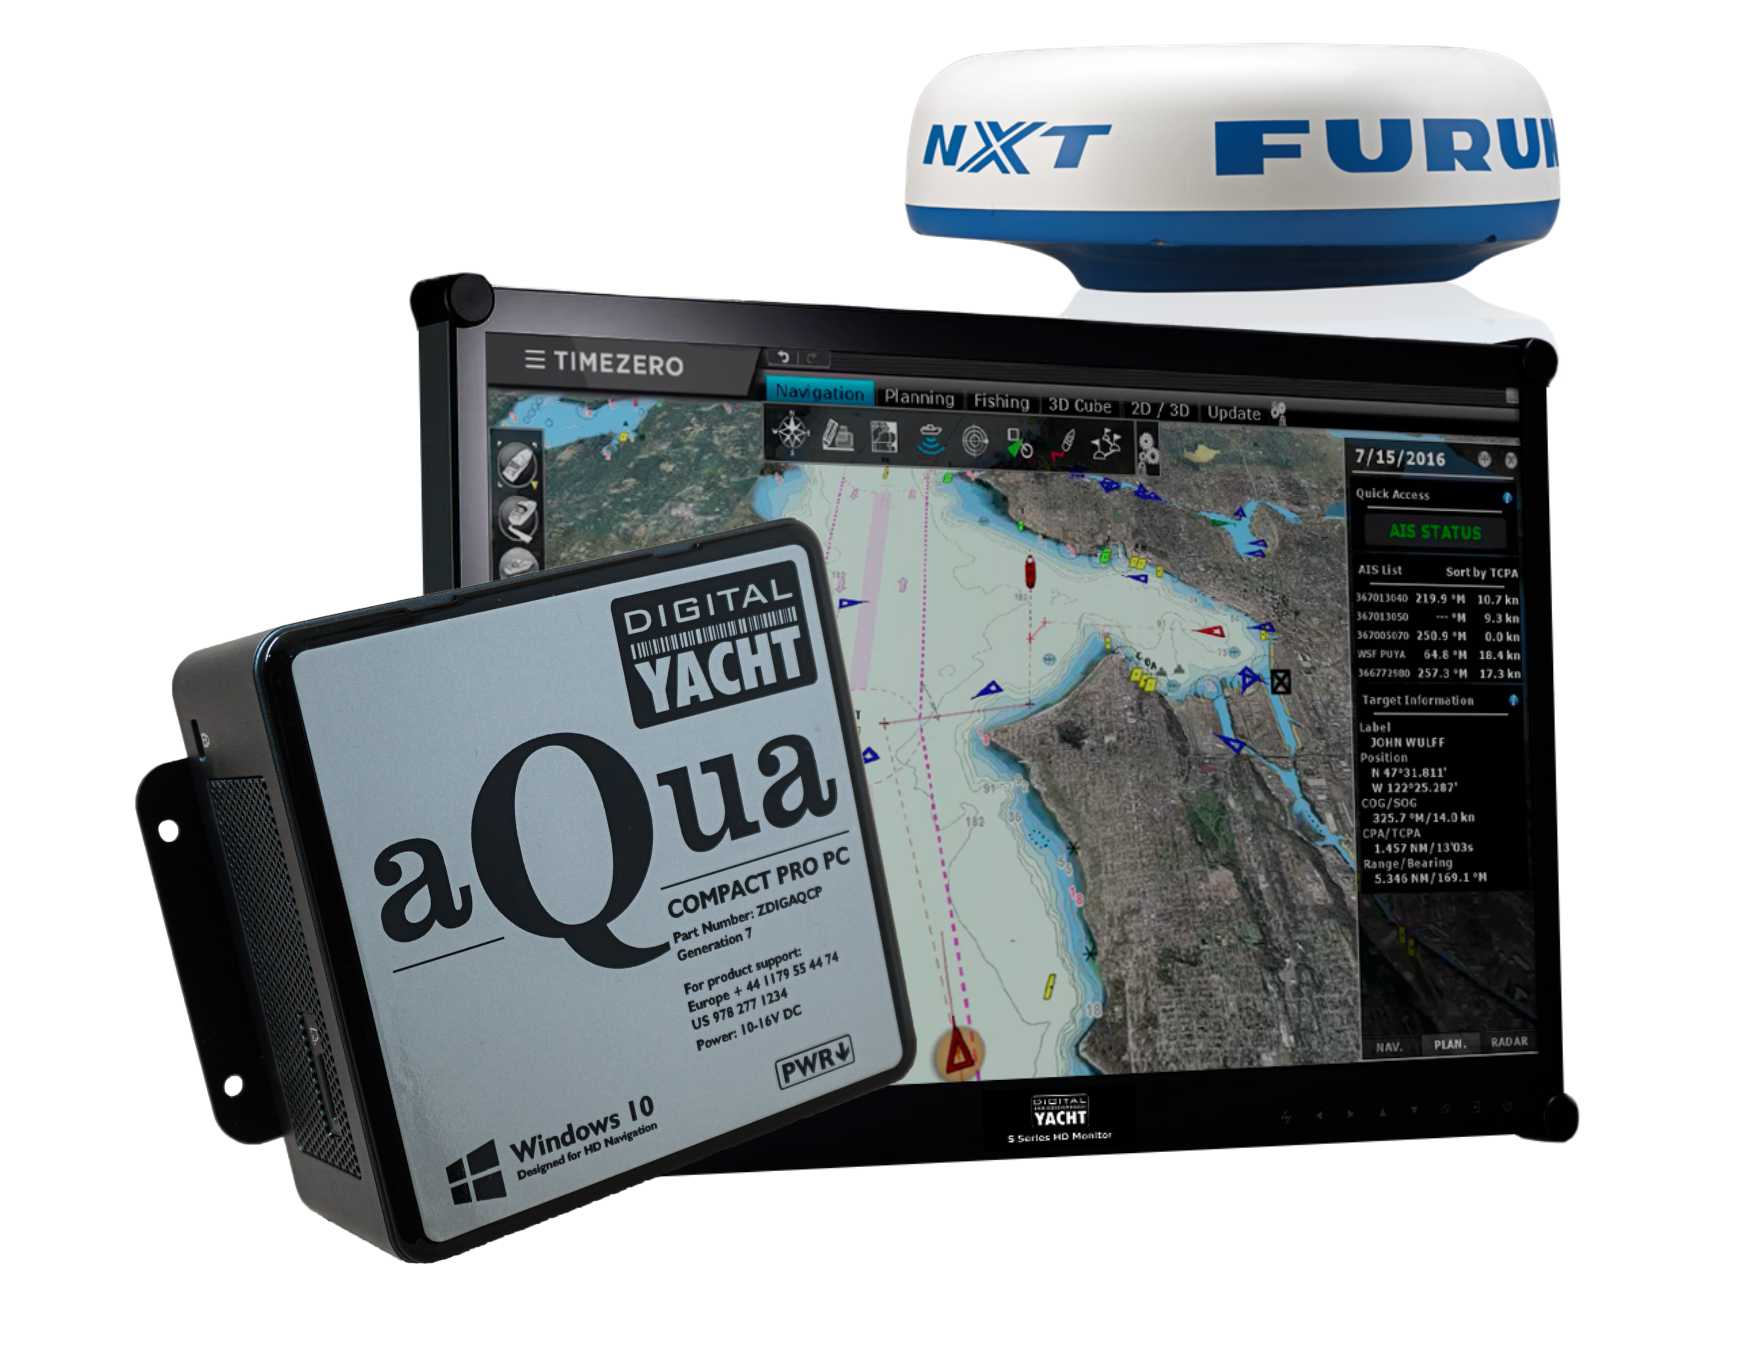 yacht racing navigation software